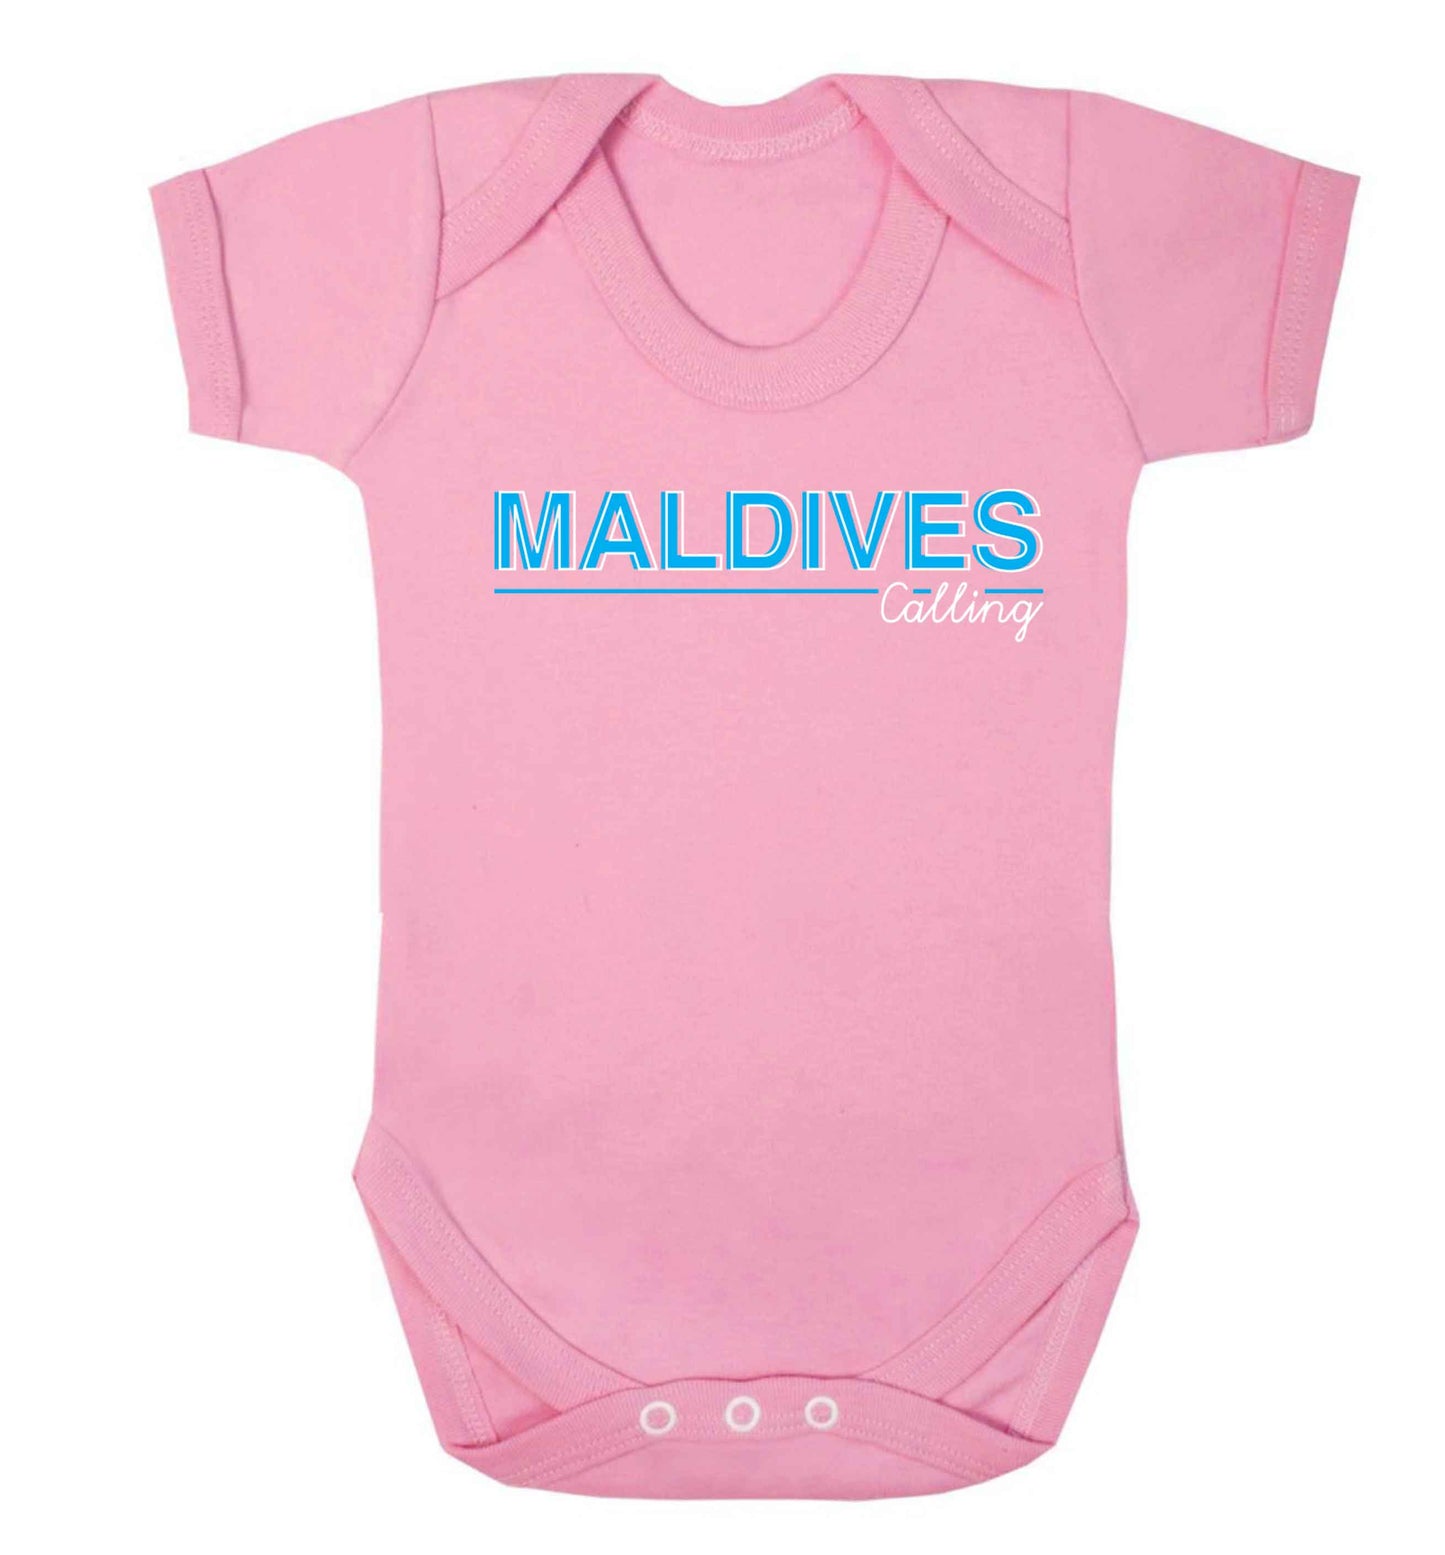 Maldives calling Baby Vest pale pink 18-24 months